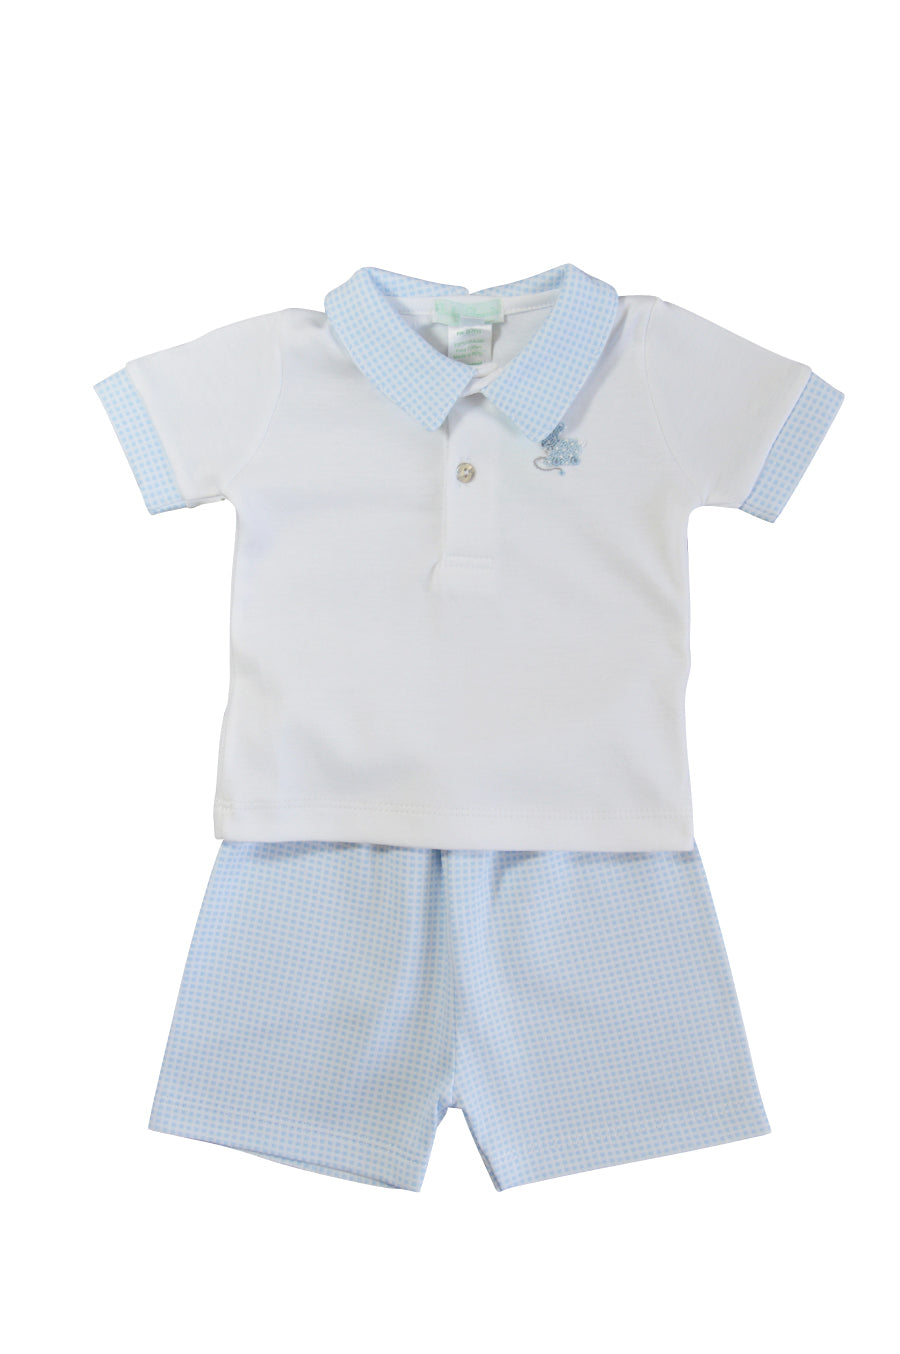 Baby Boy's Checkered Bunny Short Set - Little Threads Inc. Children's Clothing